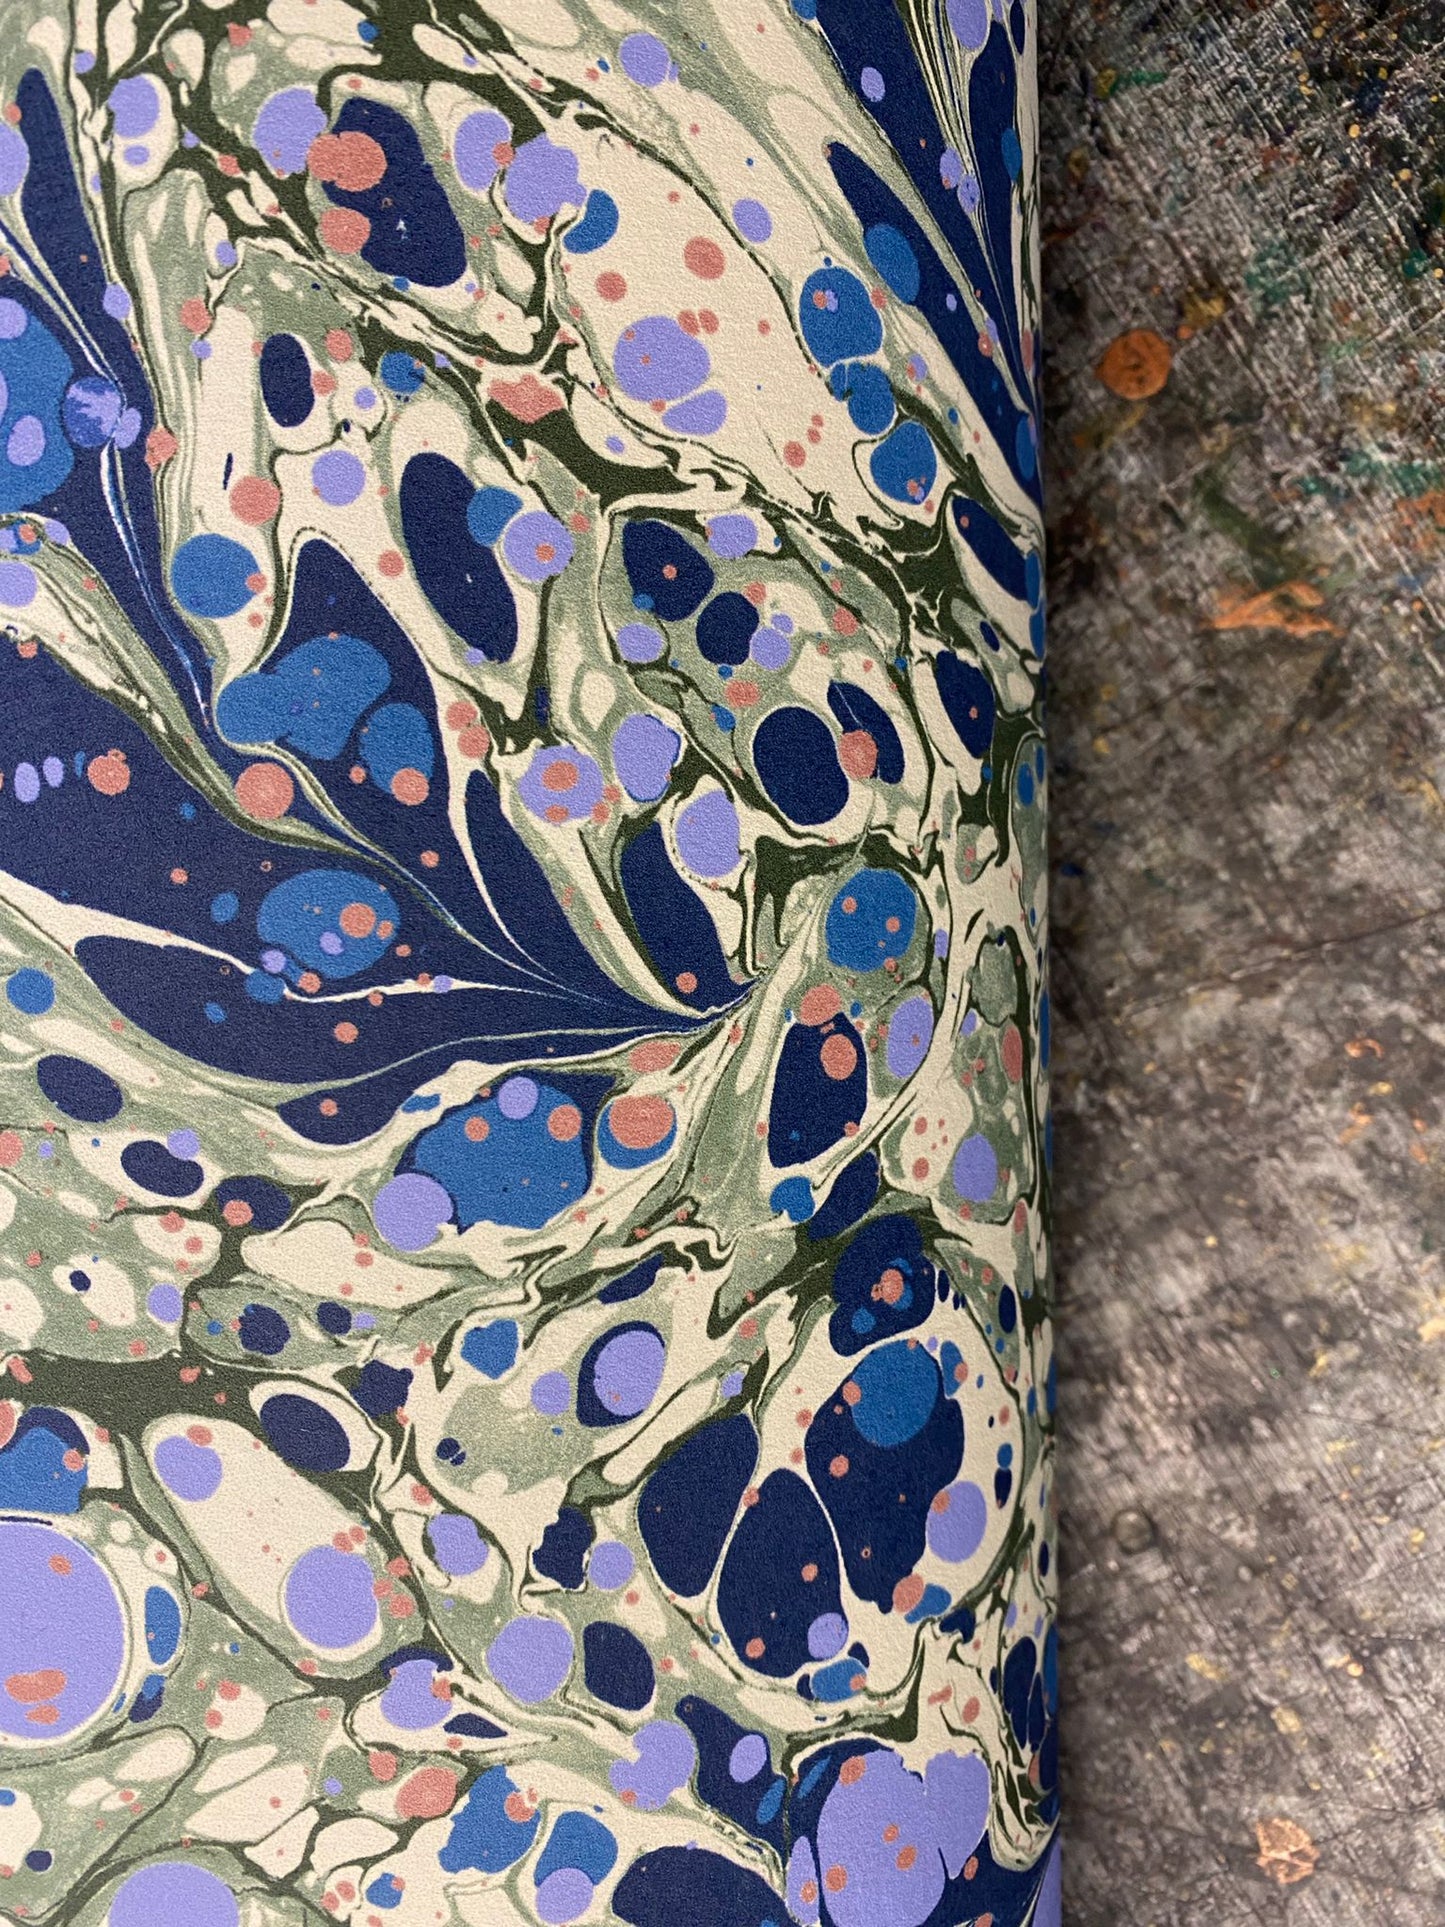 Marbled Wallpaper - 'Juniper' Colour: Blue Anise - Eco Non-Woven